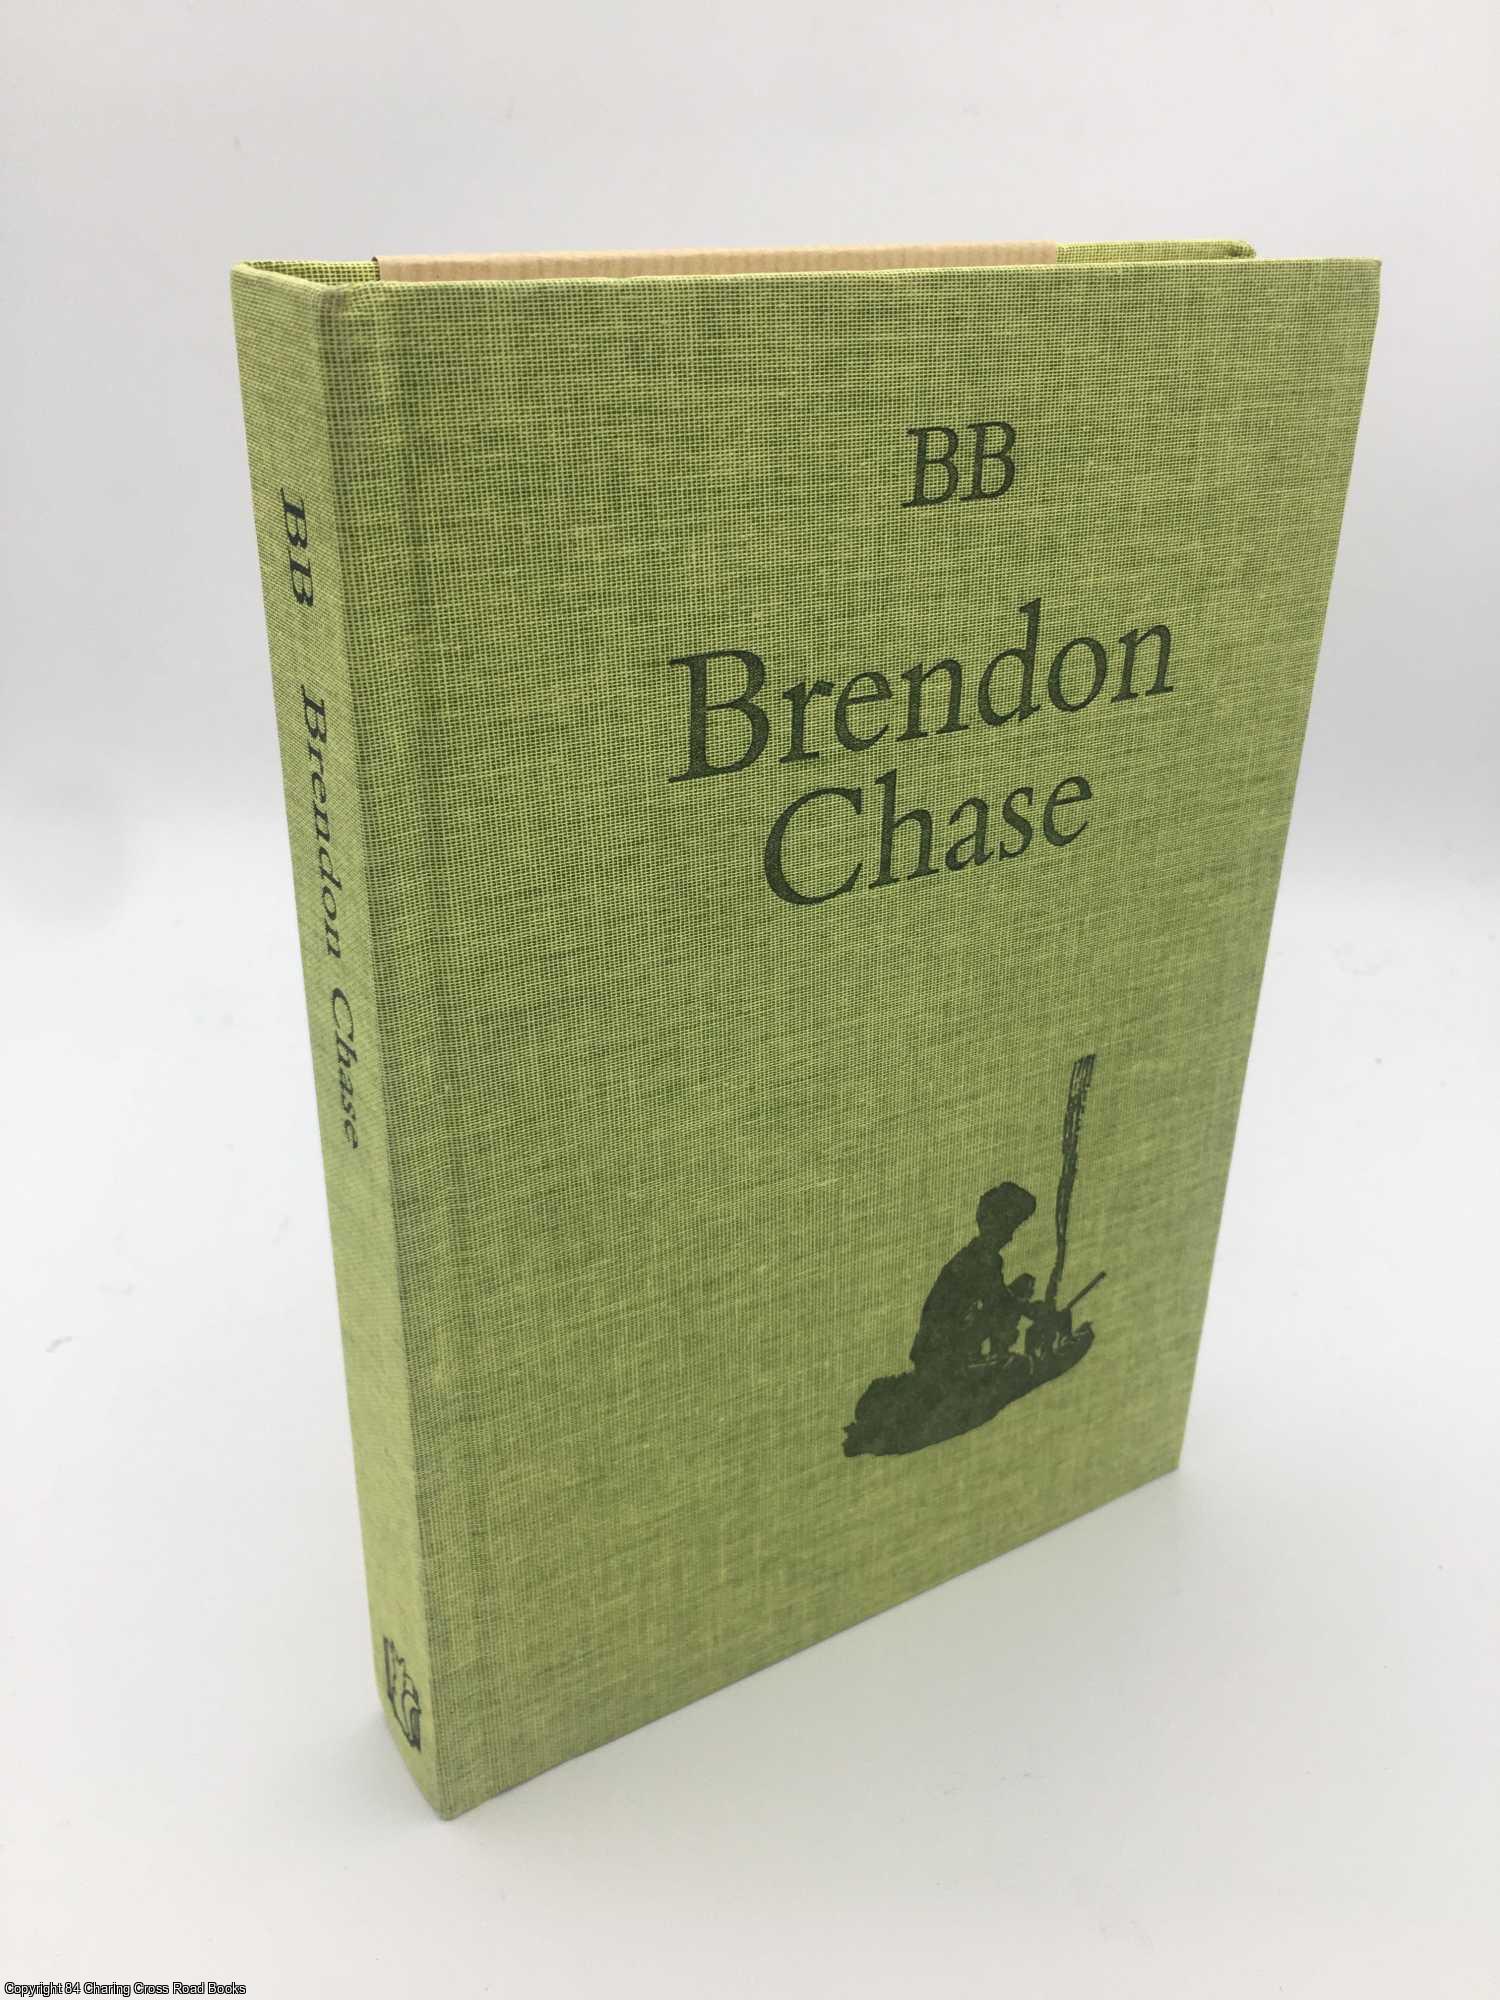 BB - Brendon Chase